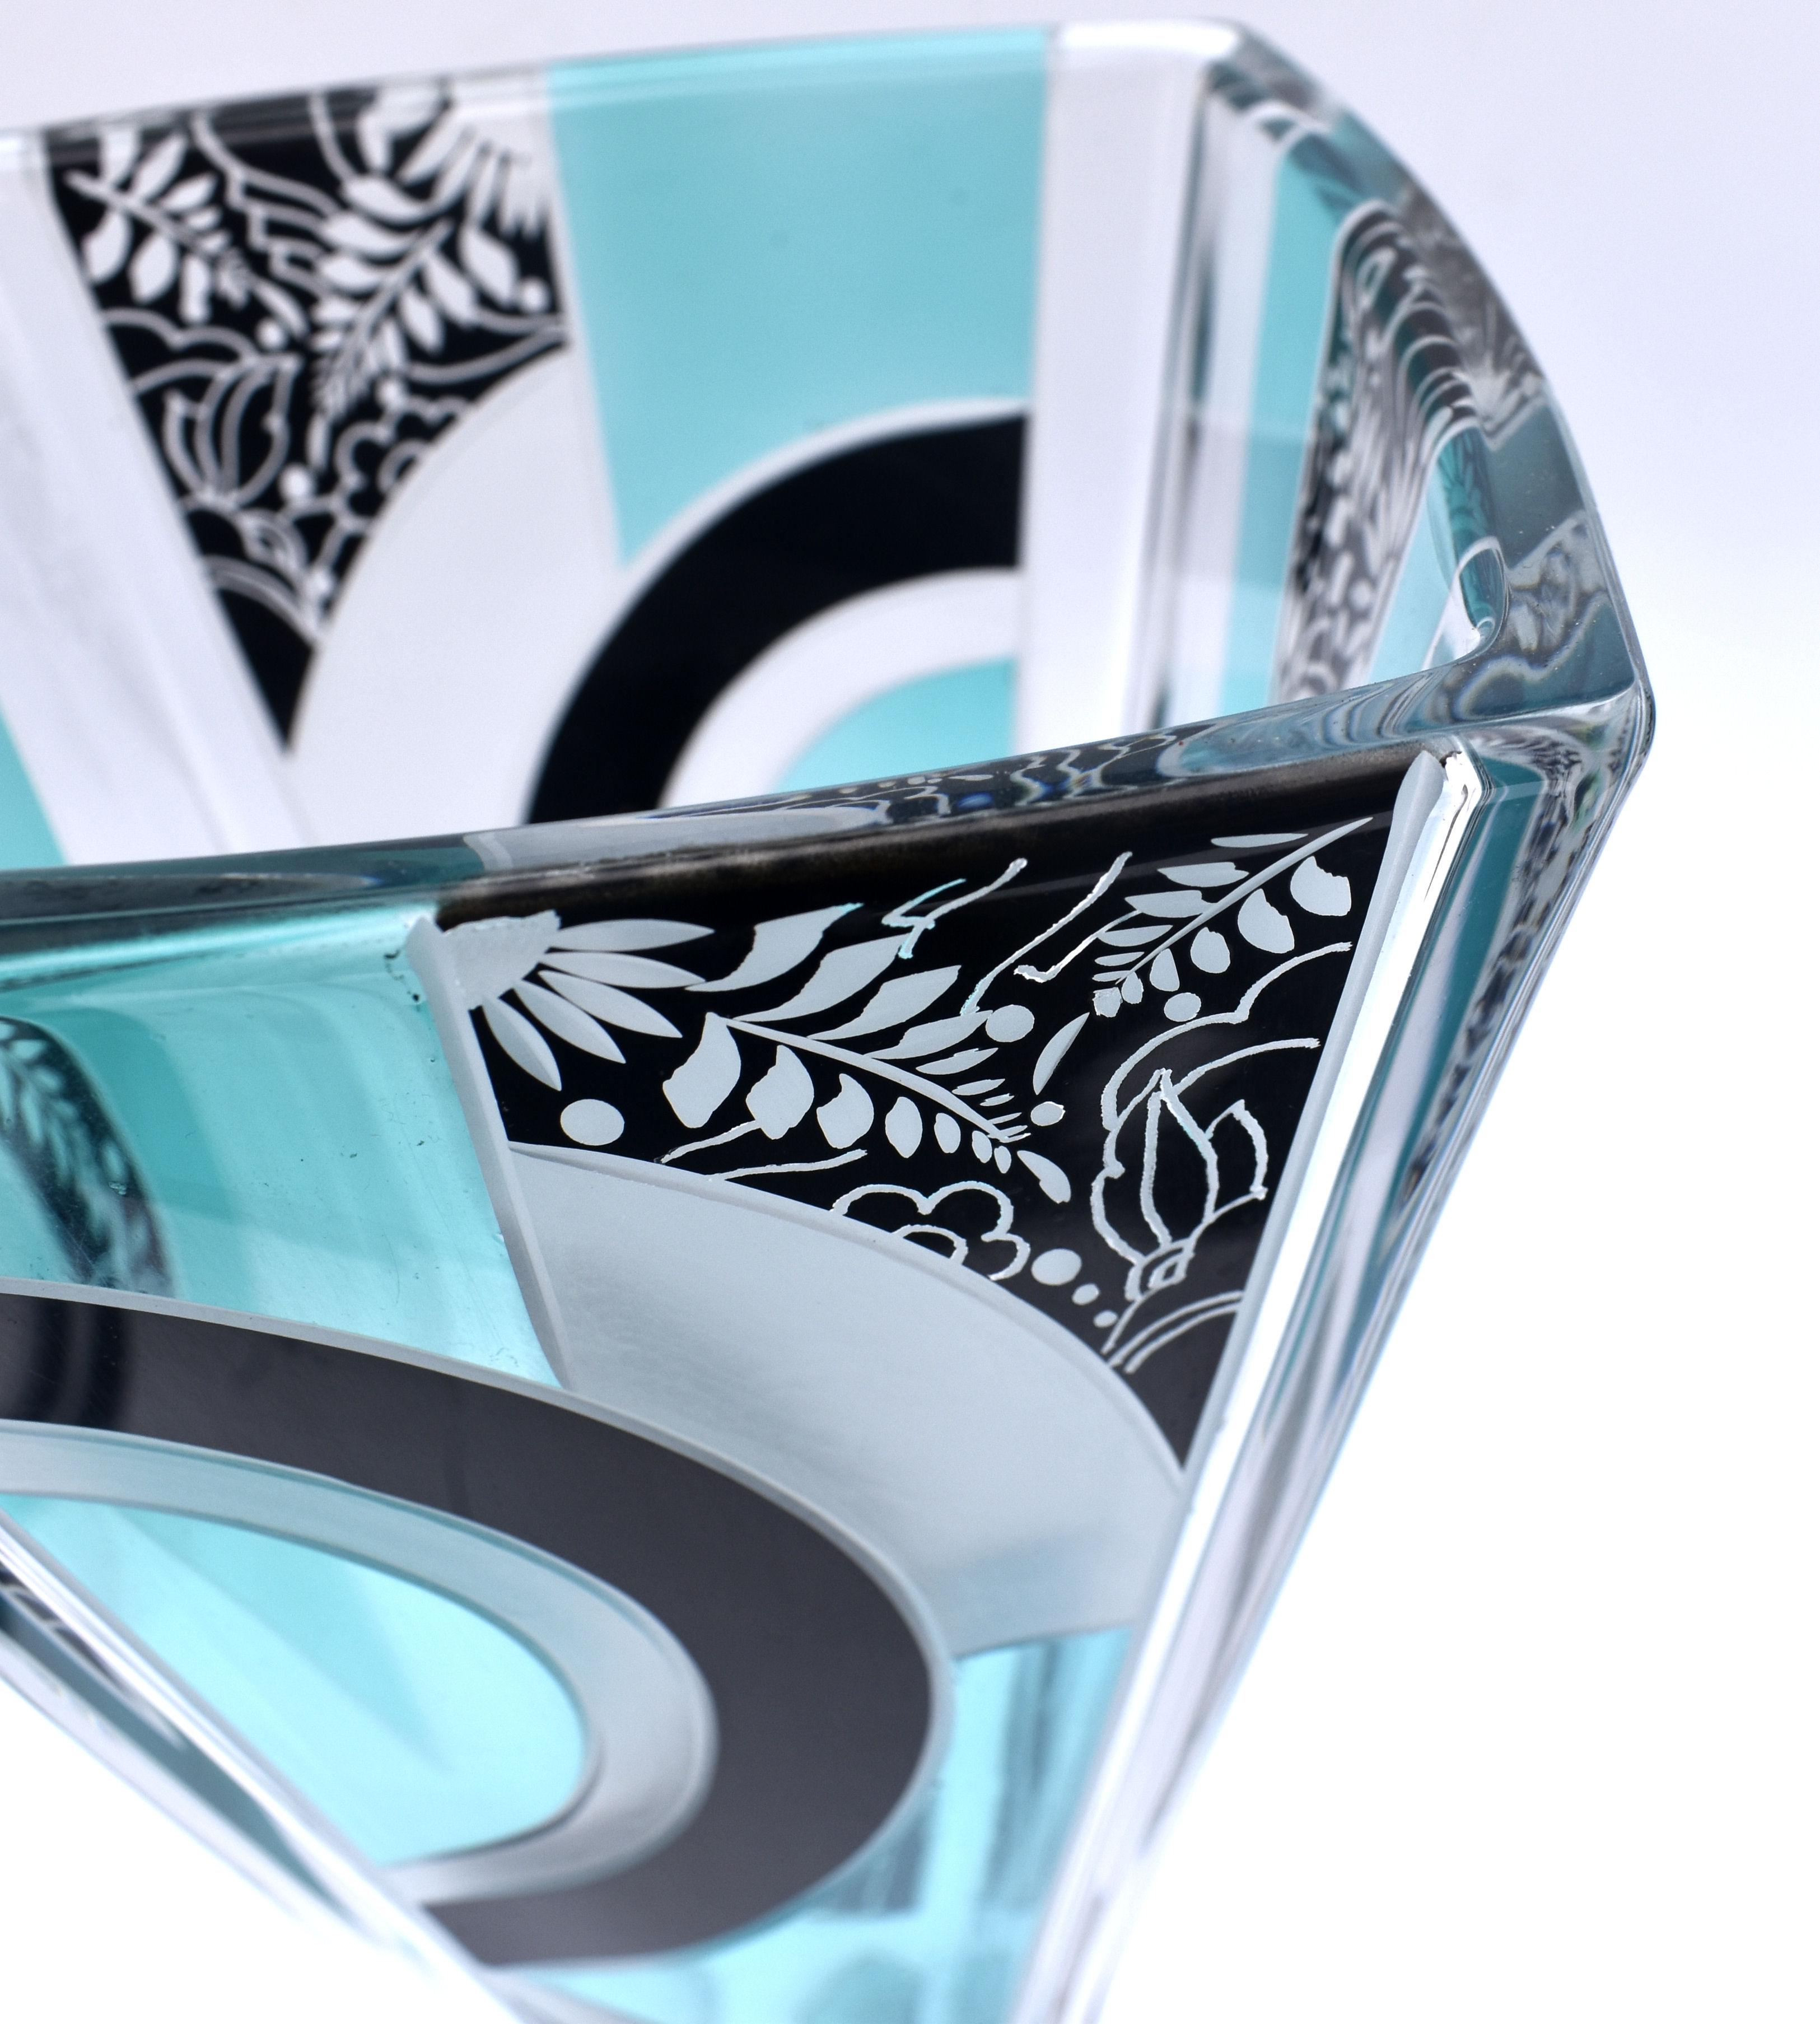 Art Deco Glass & Enamel Etched Vase 2